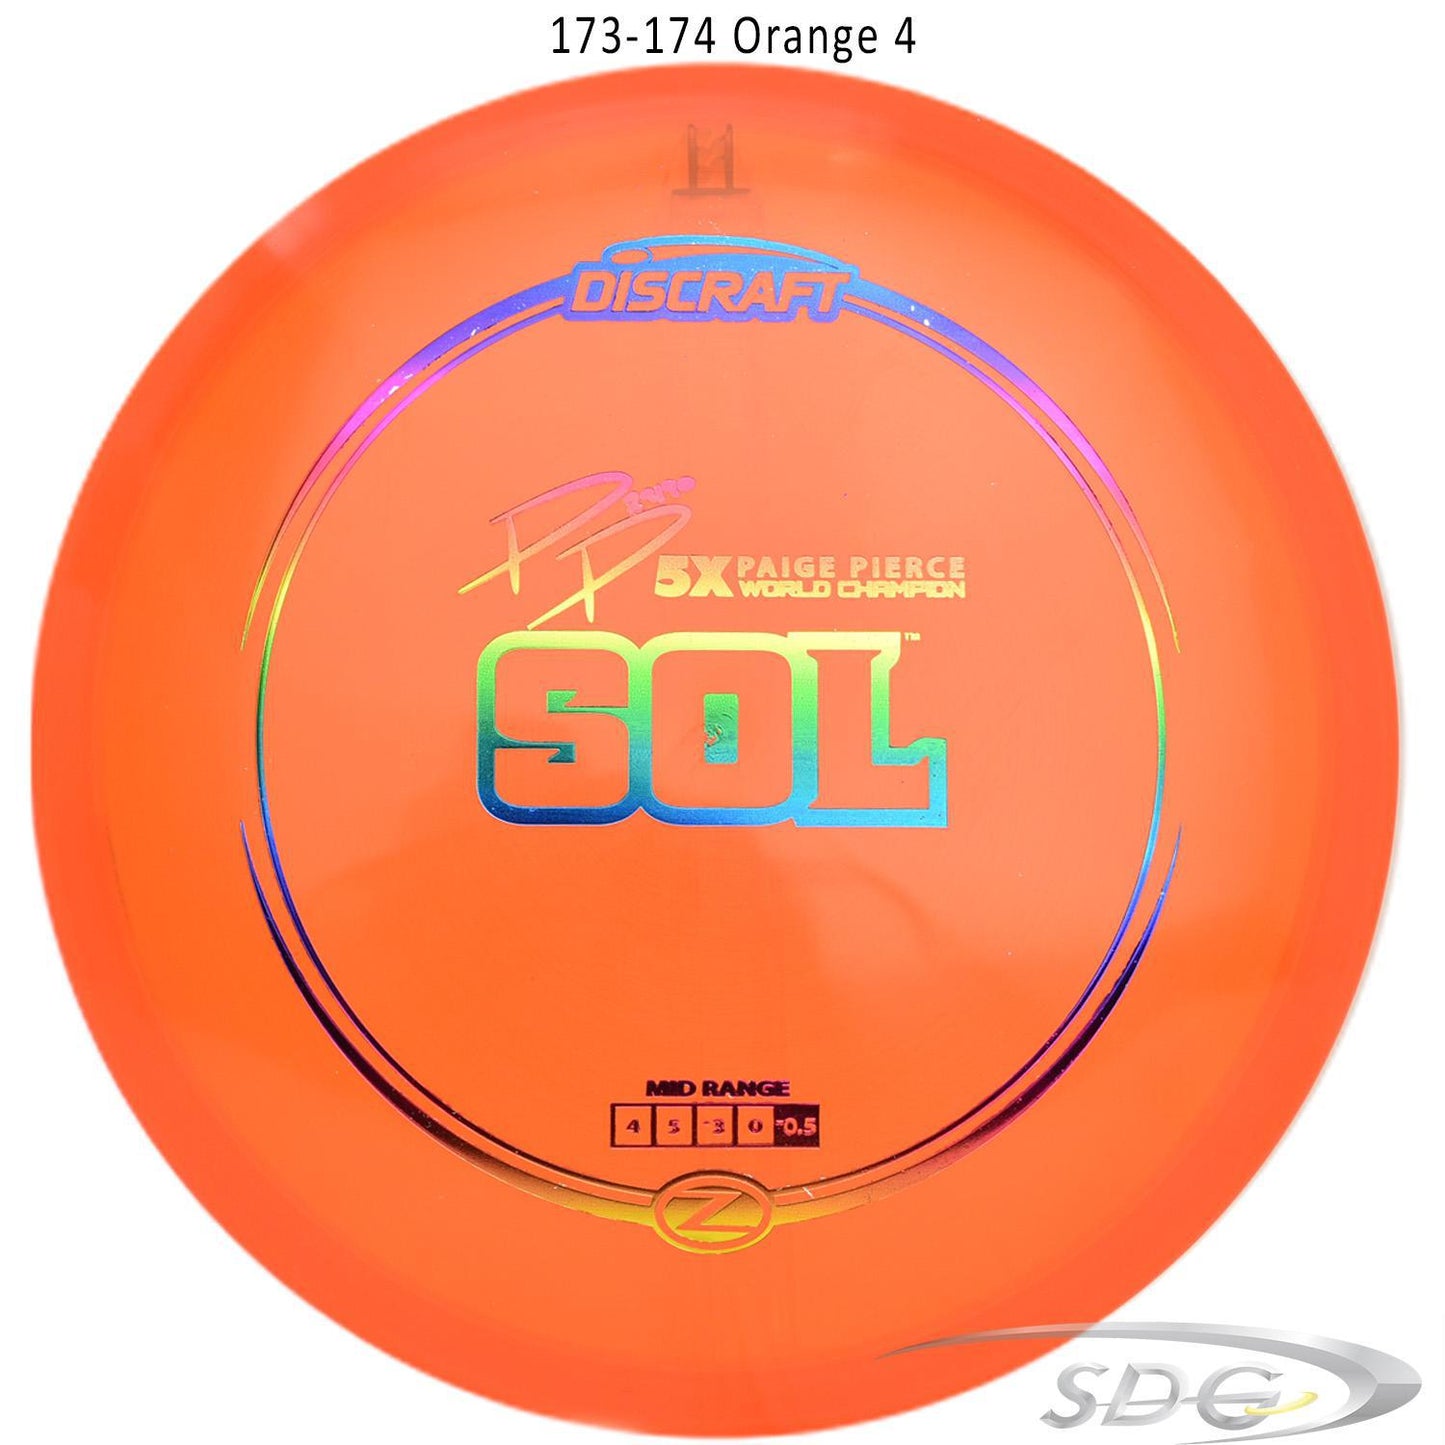 discraft-z-line-sol-paige-pierce-signature-disc-golf-mid-range 173-174 Orange 4 